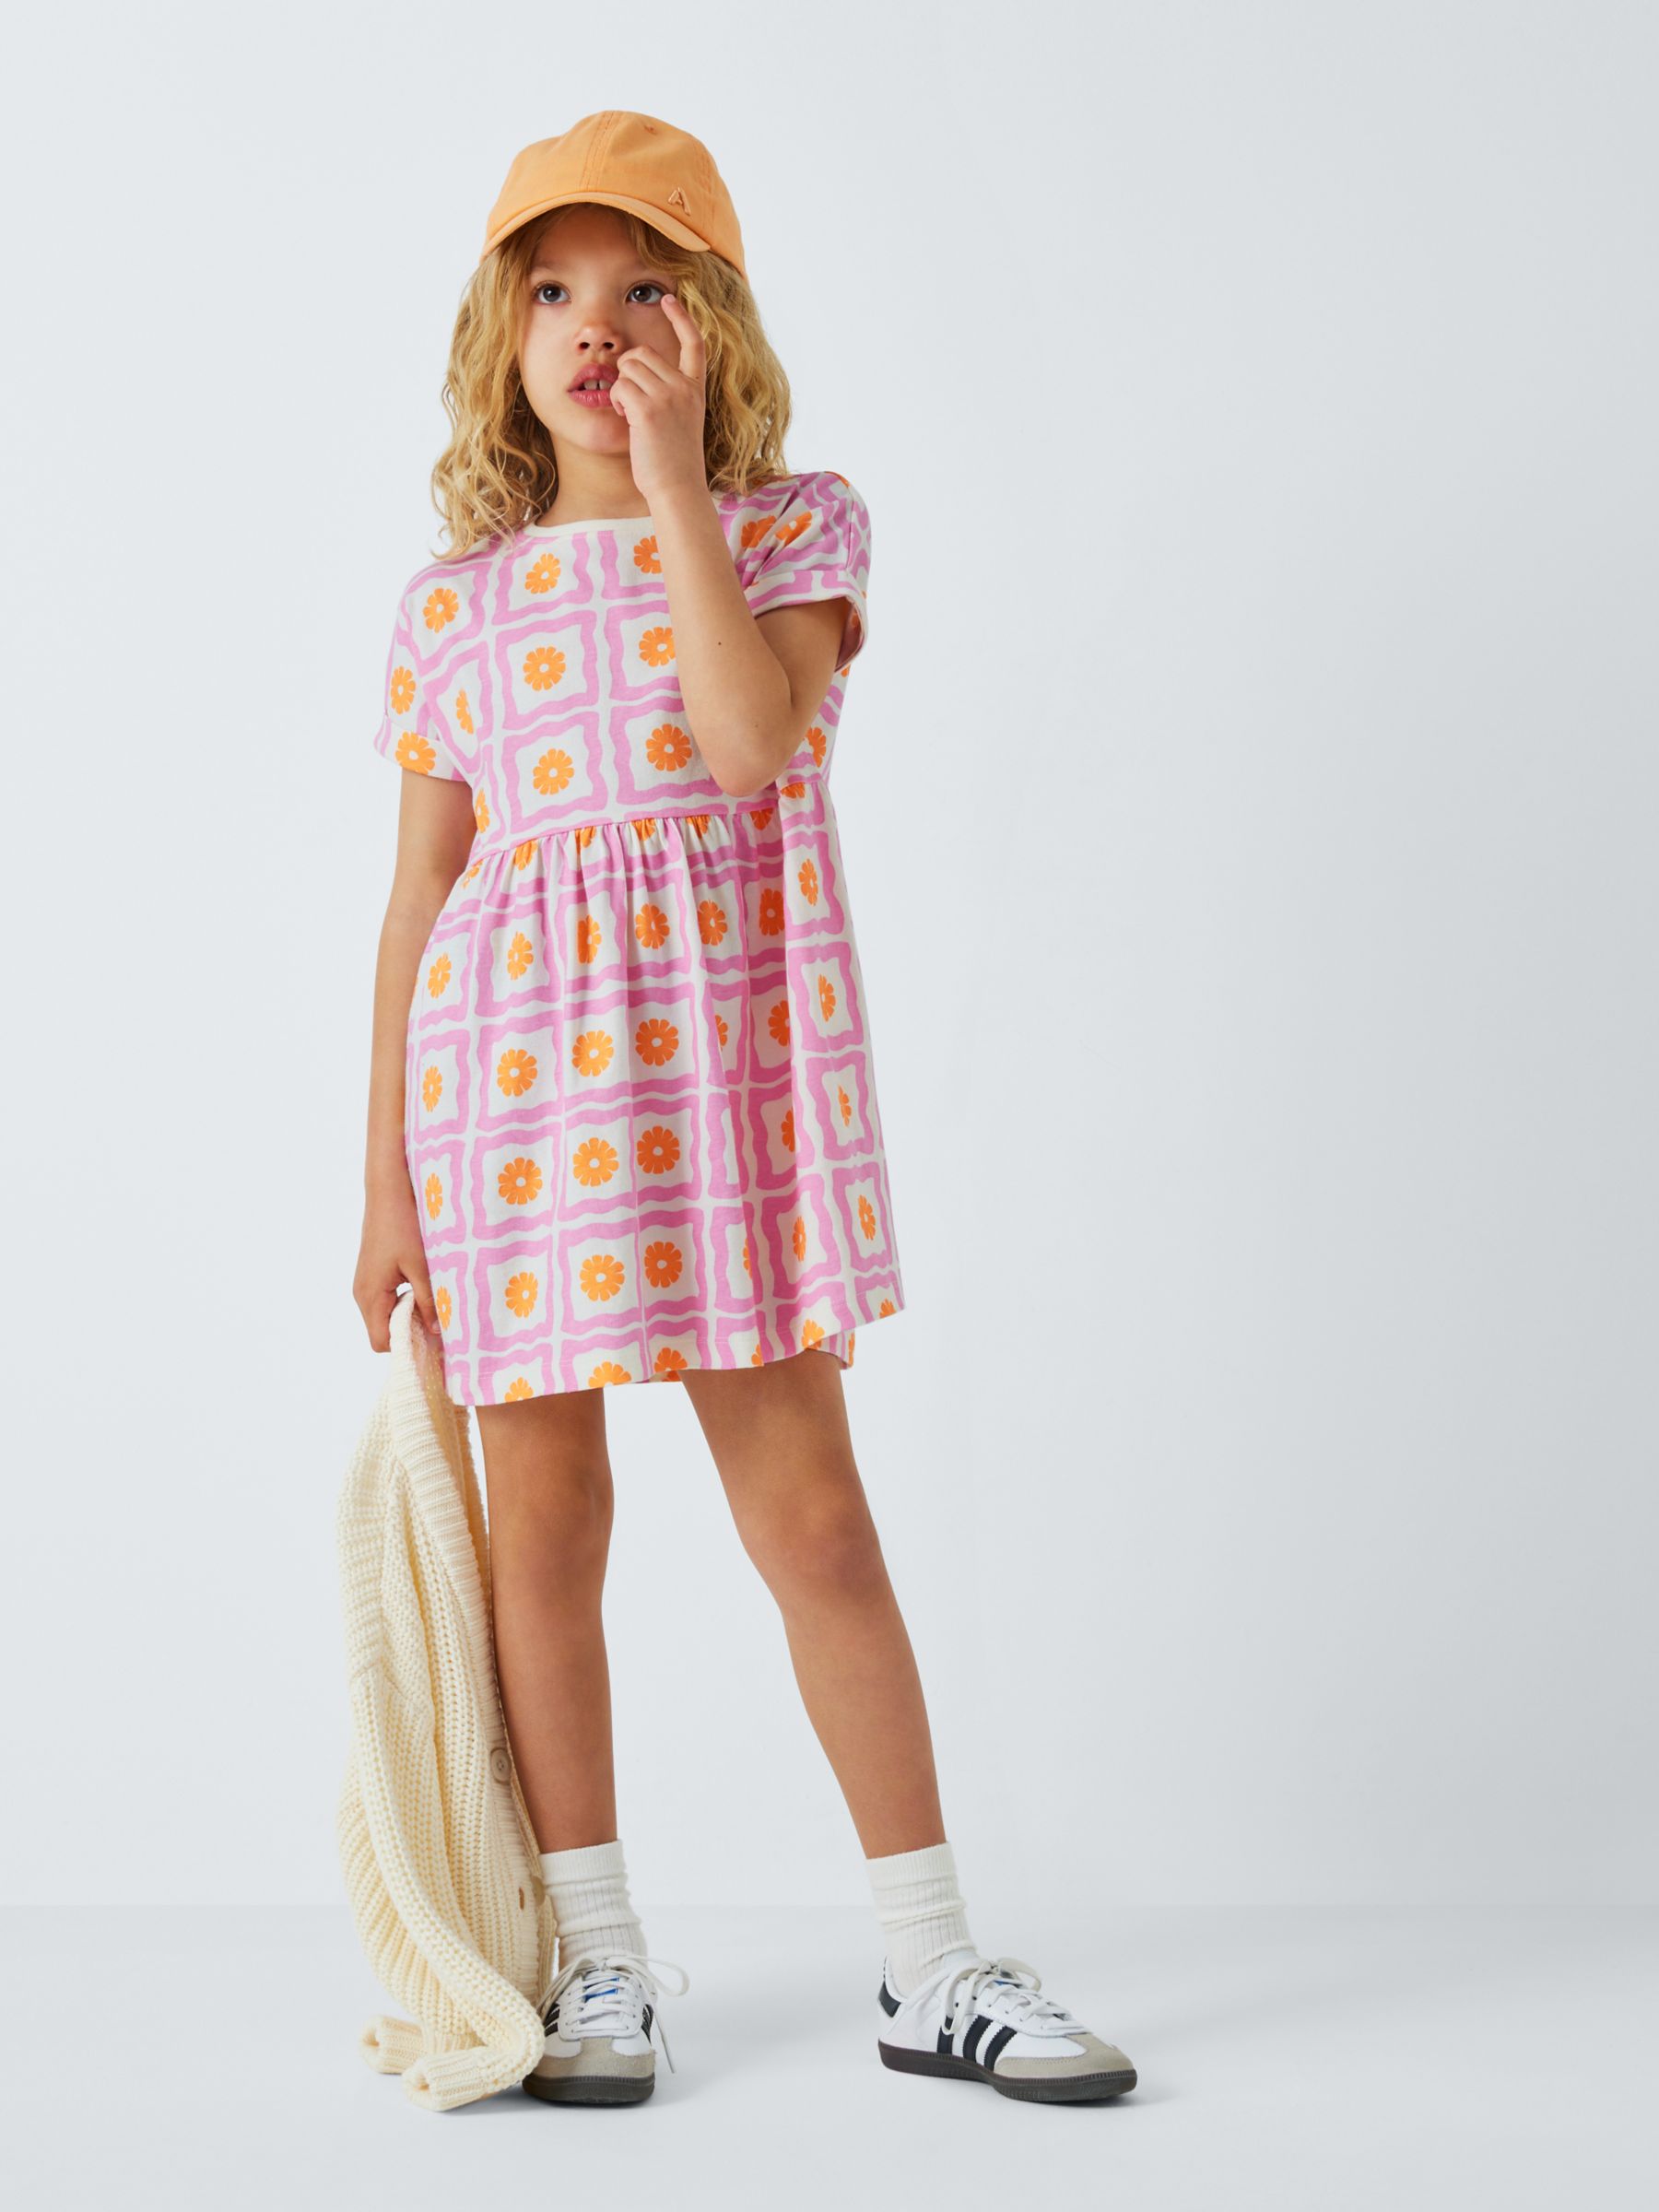 John Lewis ANYDAY Kids' Floral T-Shirt Dress, Multi, 11 years